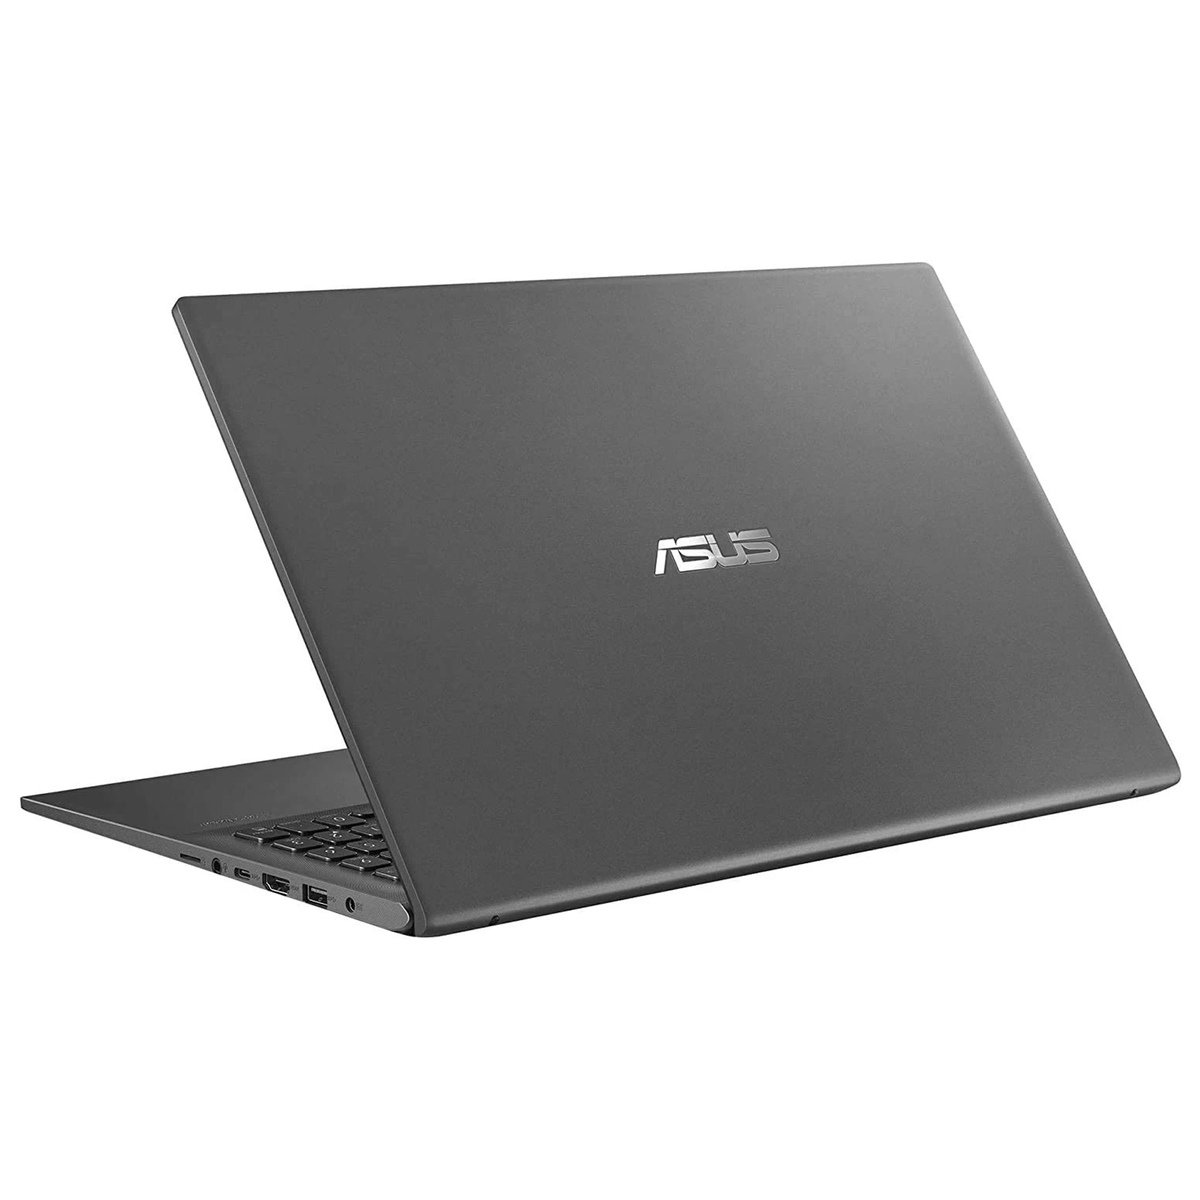 Asus VivoBook R Laptop R564JA-UH31T - 15.6” FHD Touch Screen Display, 10th Gen Intel Core i3 -1005G1, 4GB RAM, 128GB SSD, Intel UHD Graphics 620, Slate Gray